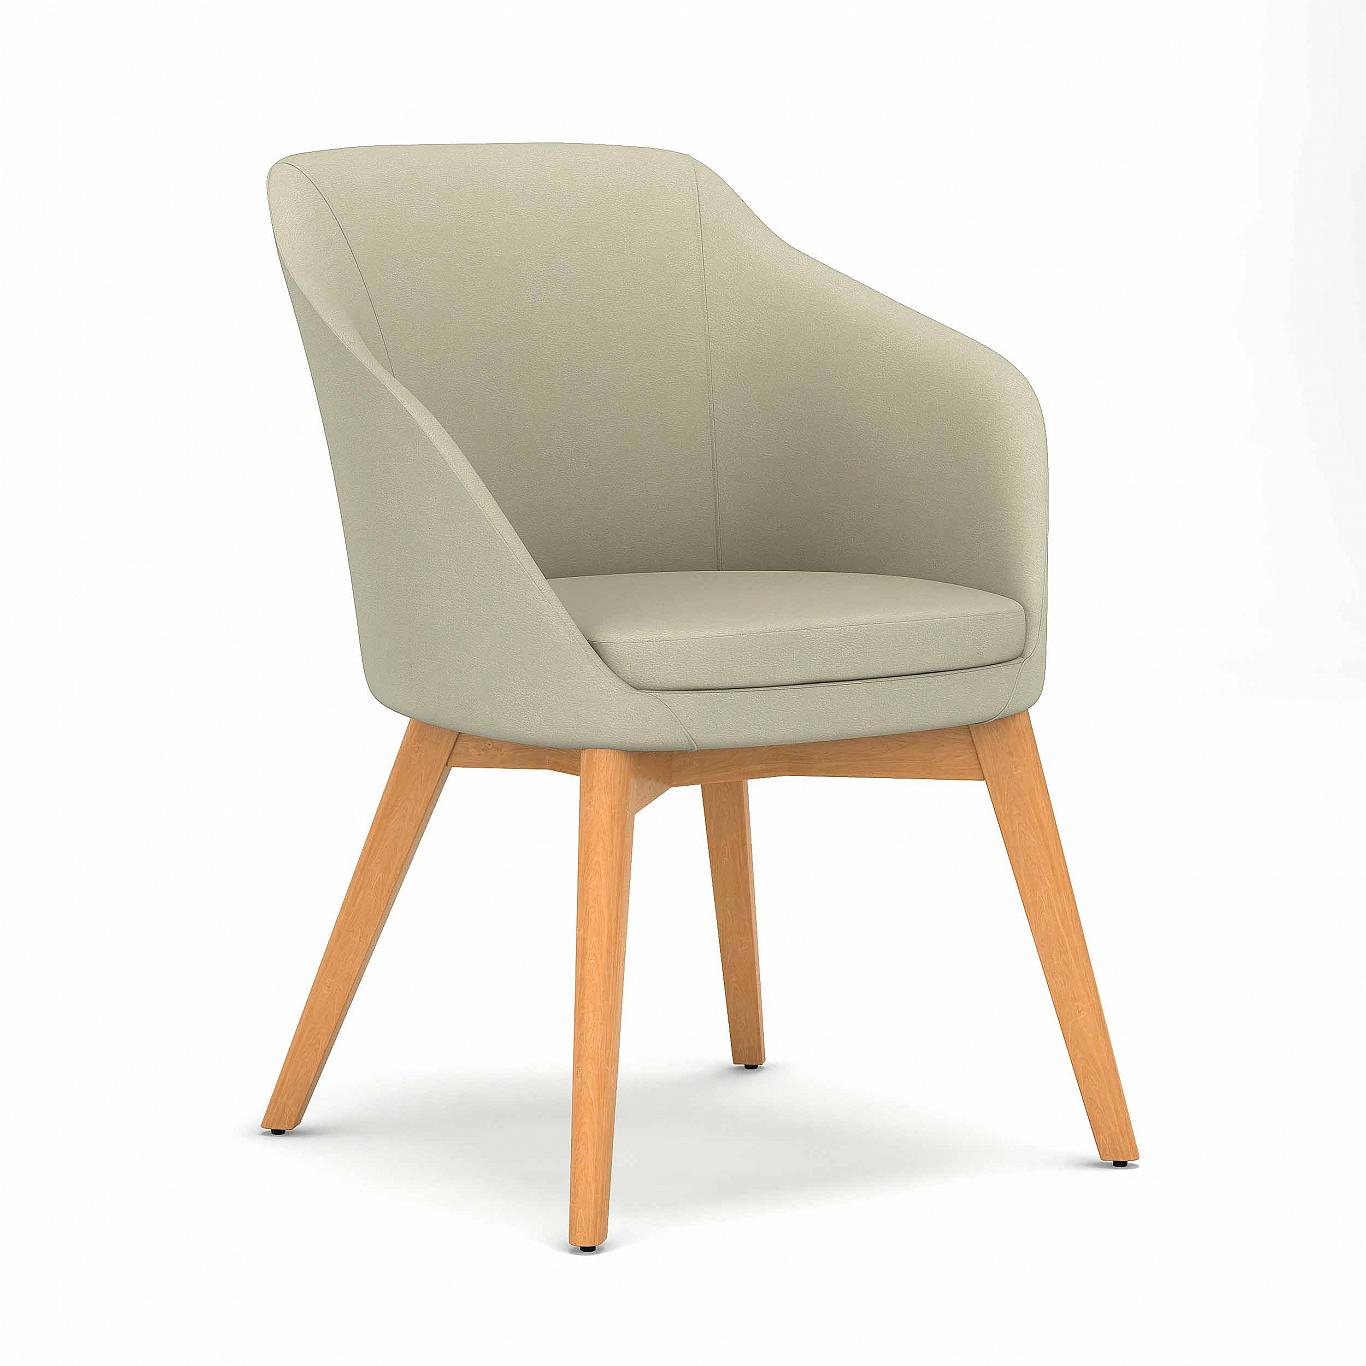 850-L7<br>Gwen Arm Chair<br>Four Legs Solid Wood